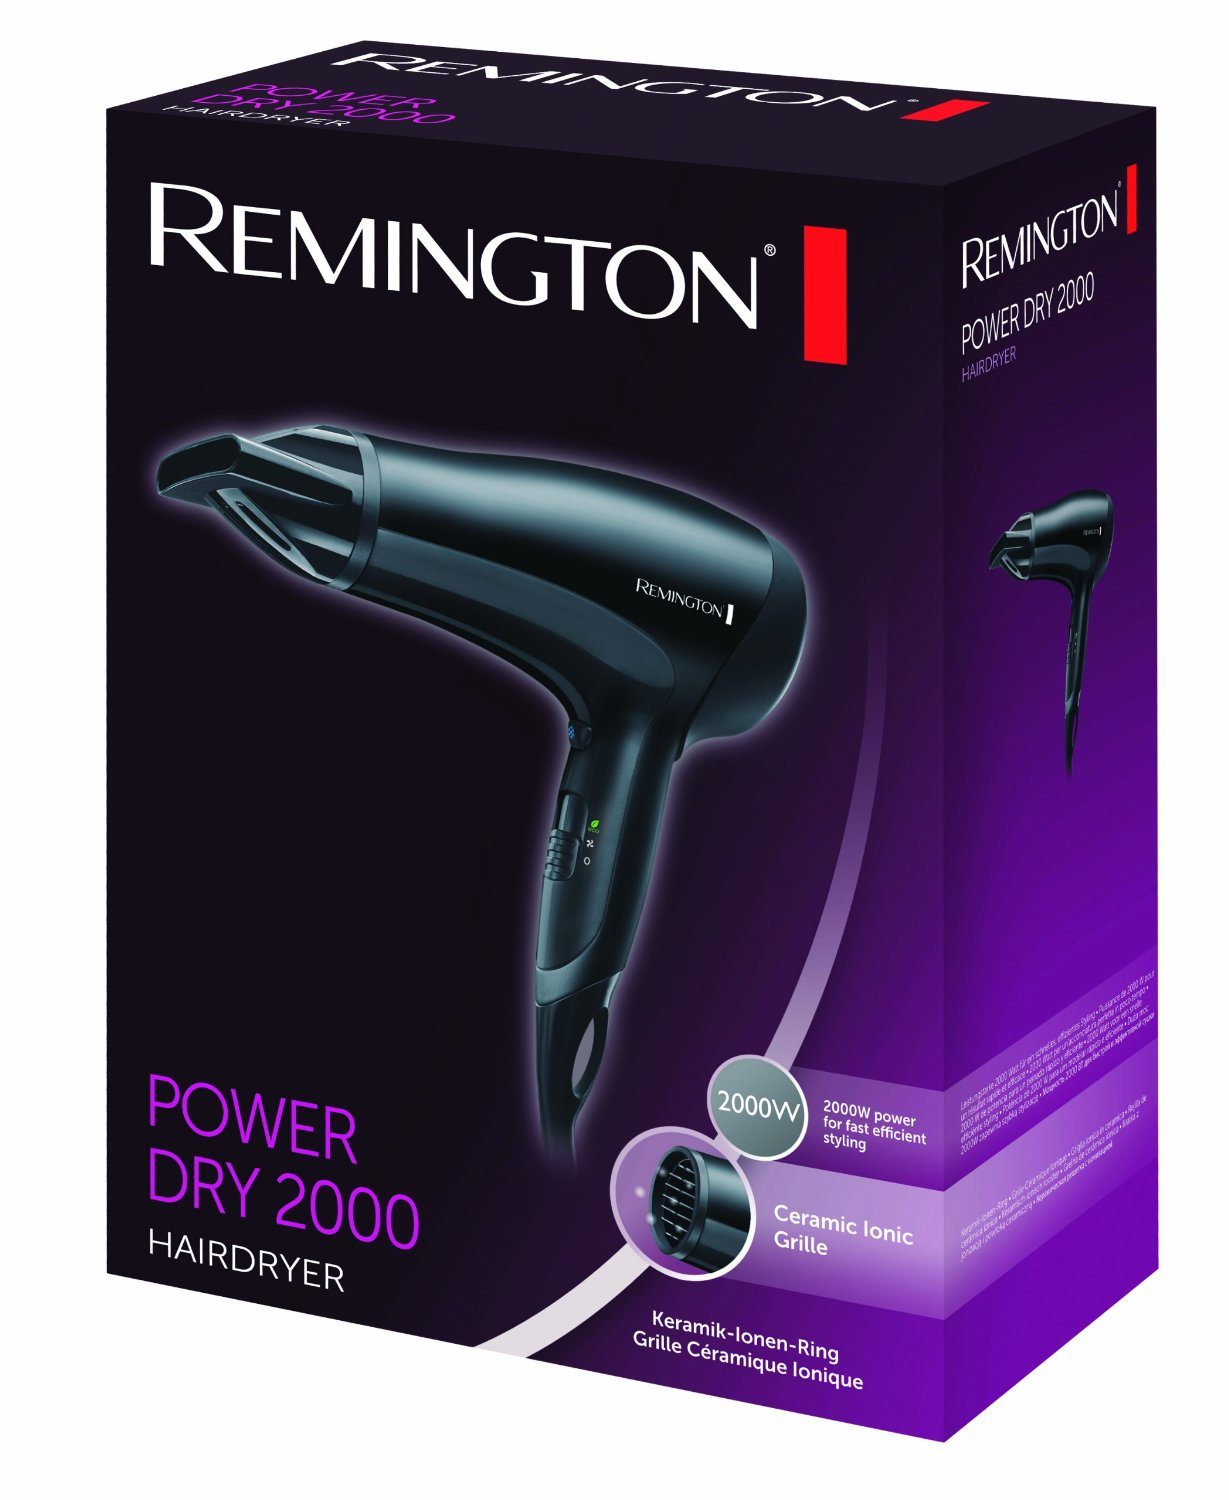 Remington D3010 2000W Power Dry Hair Dryer in box